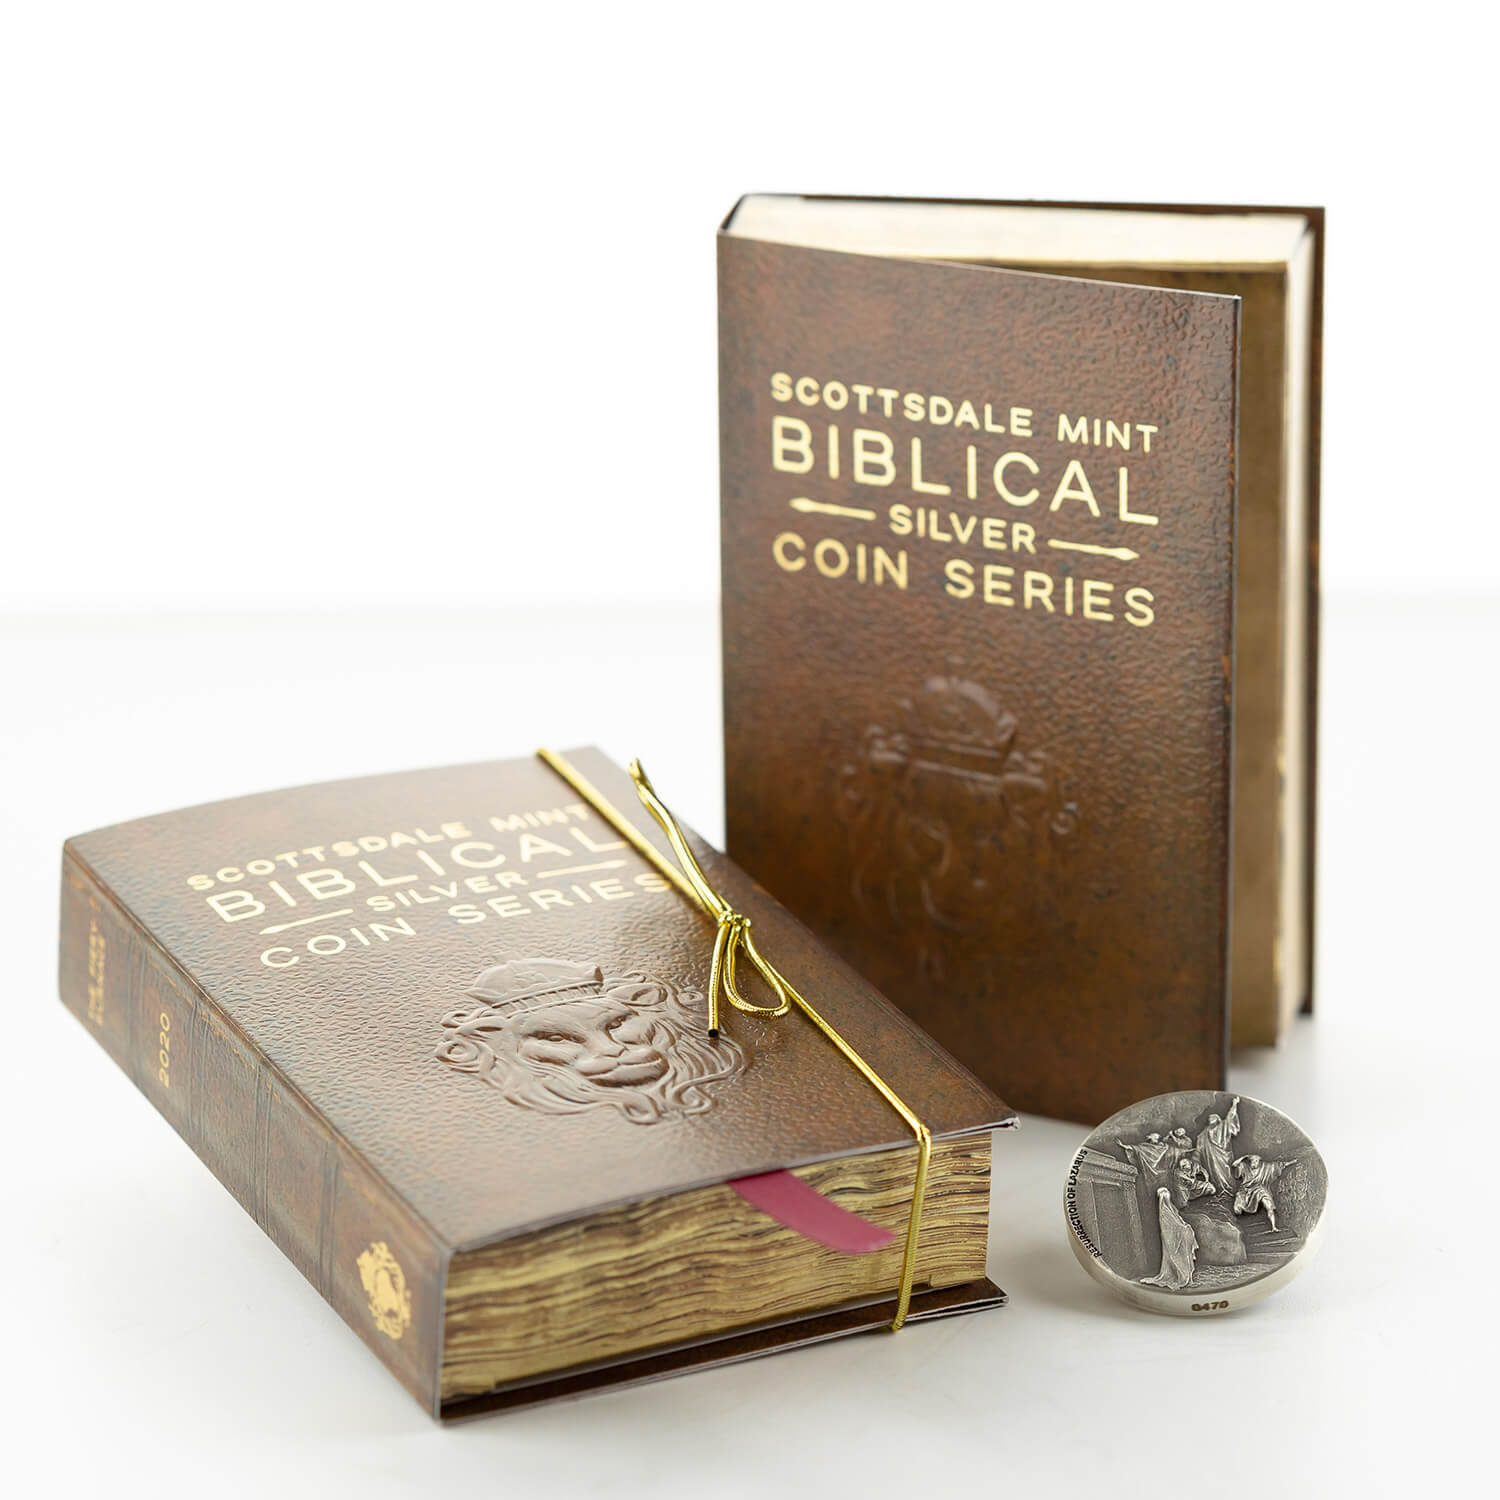 2020 Biblical Series | The Judas Kiss 2 Oz Silver Coin (copy)